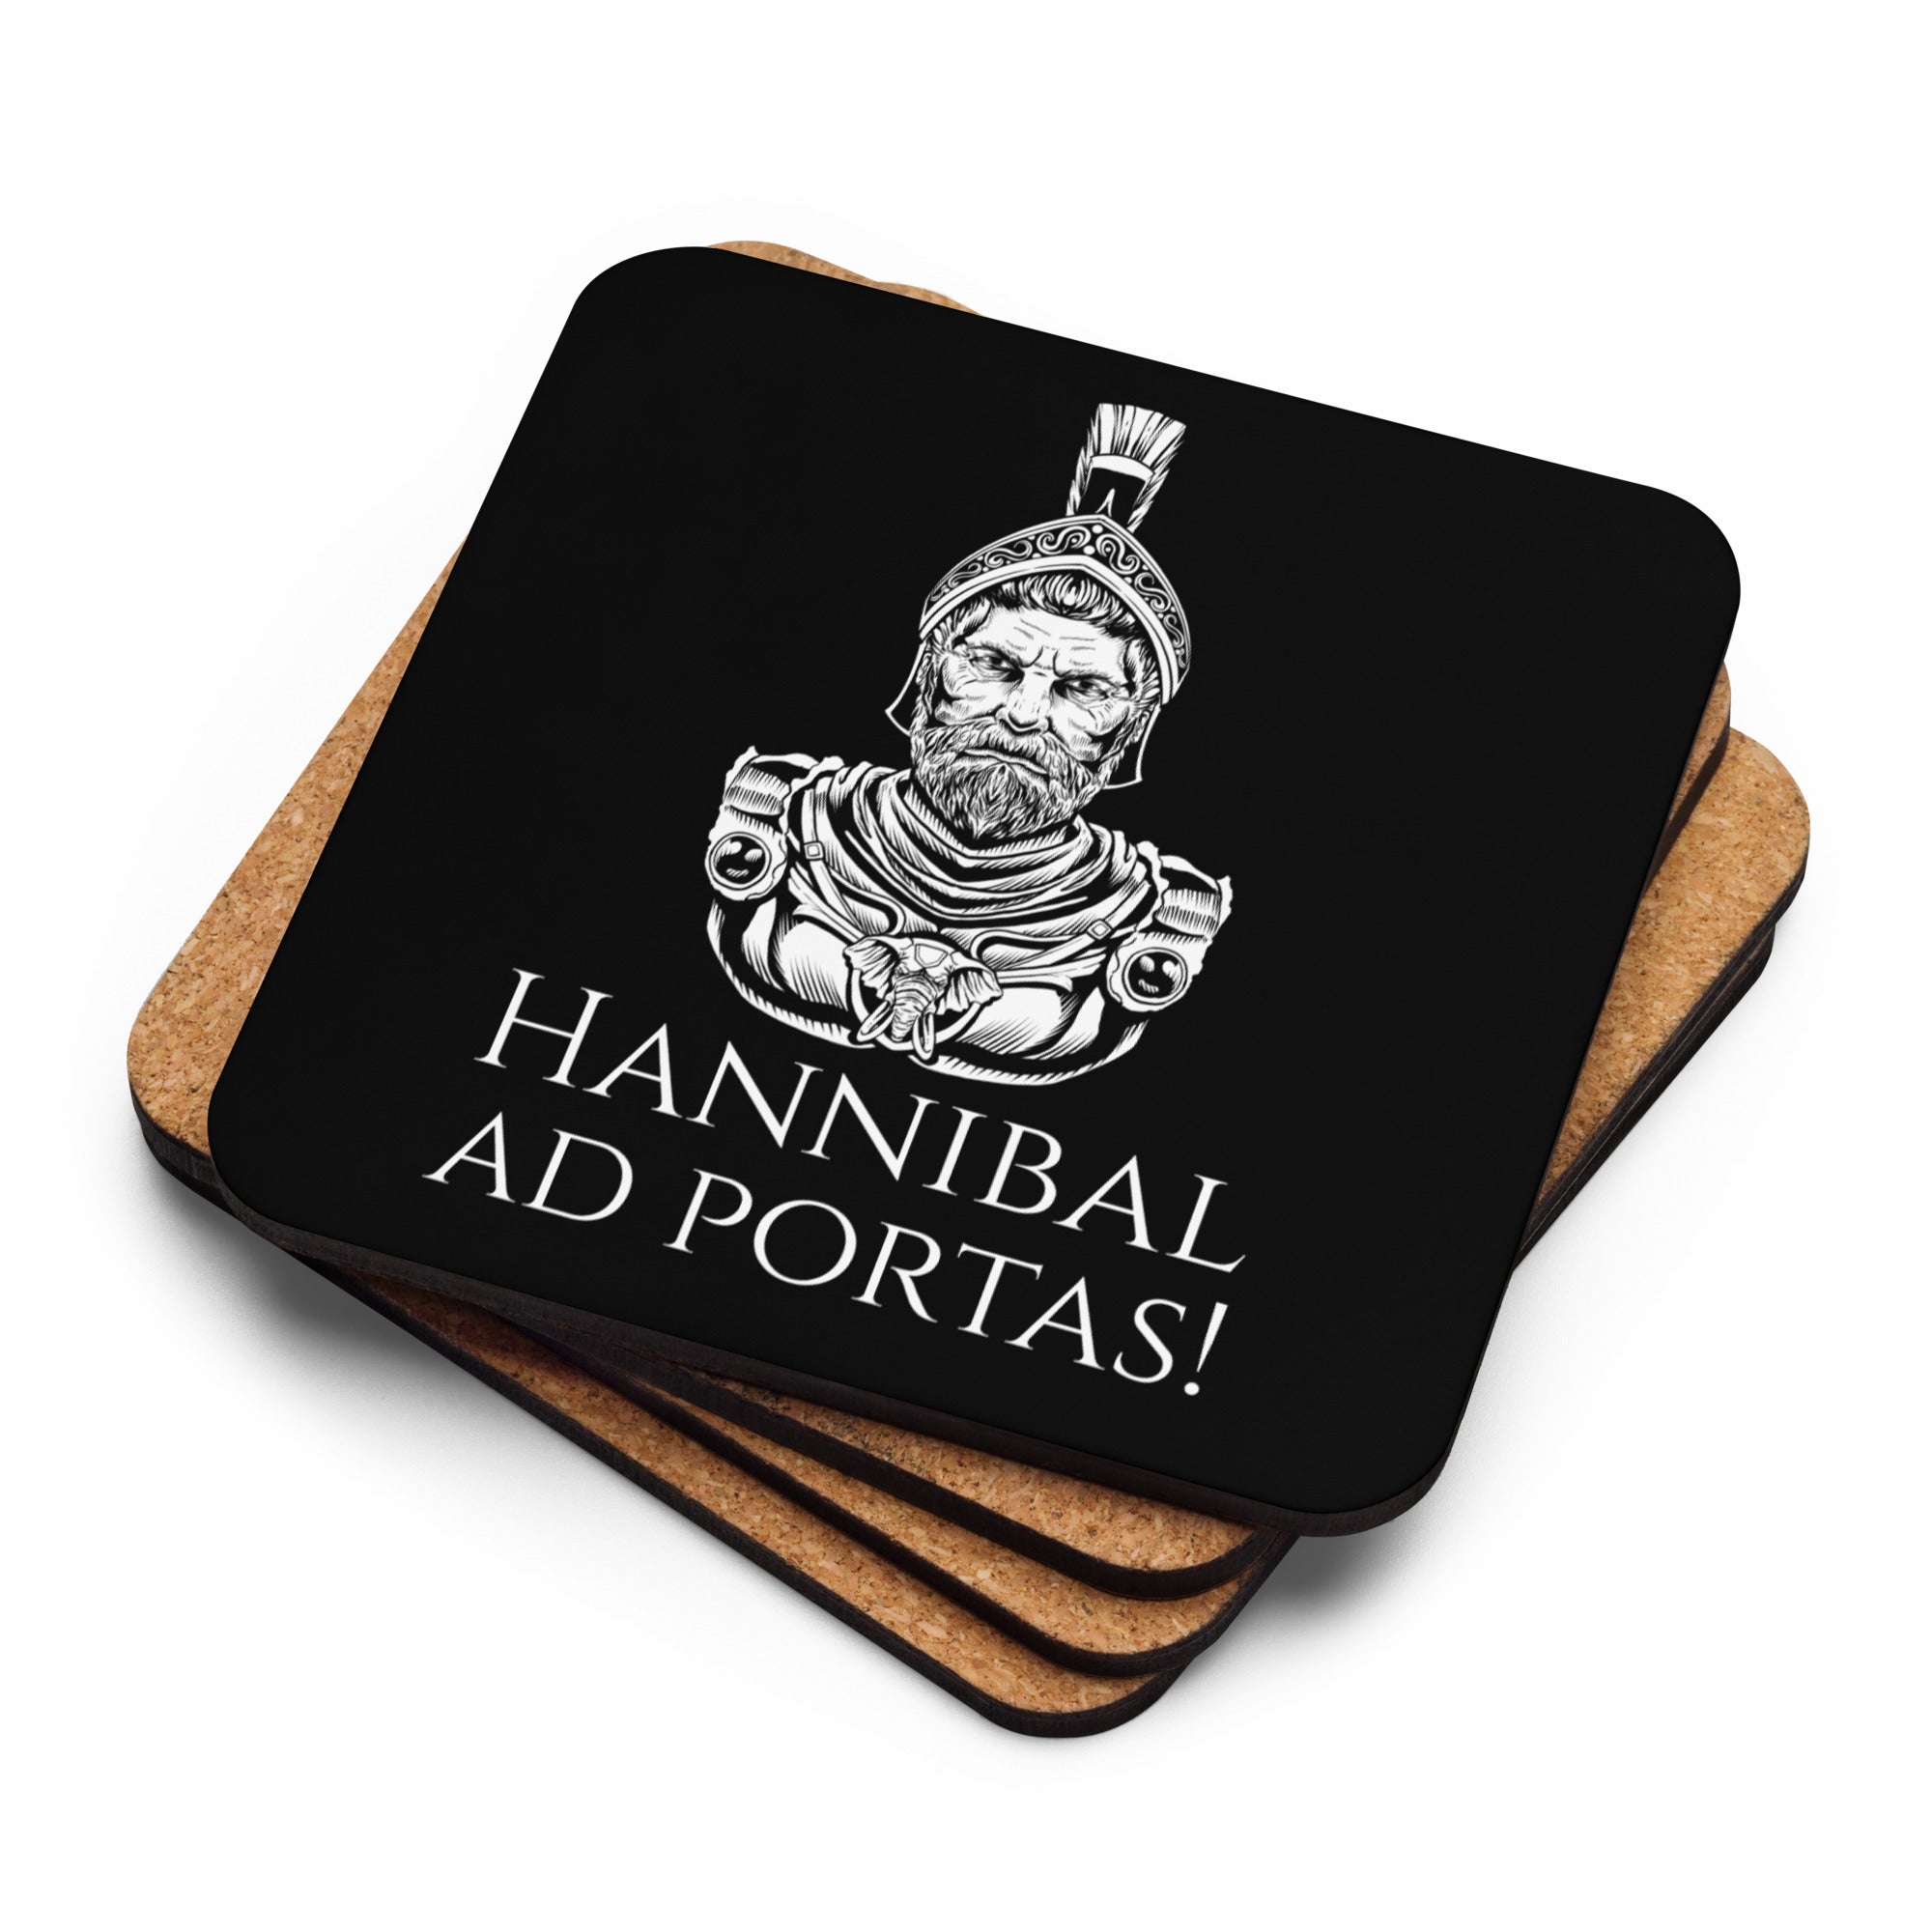 Hannibal Ad Portas! - Second Punic War - Classical Latin - Ancient Rome Cork-Back Coaster